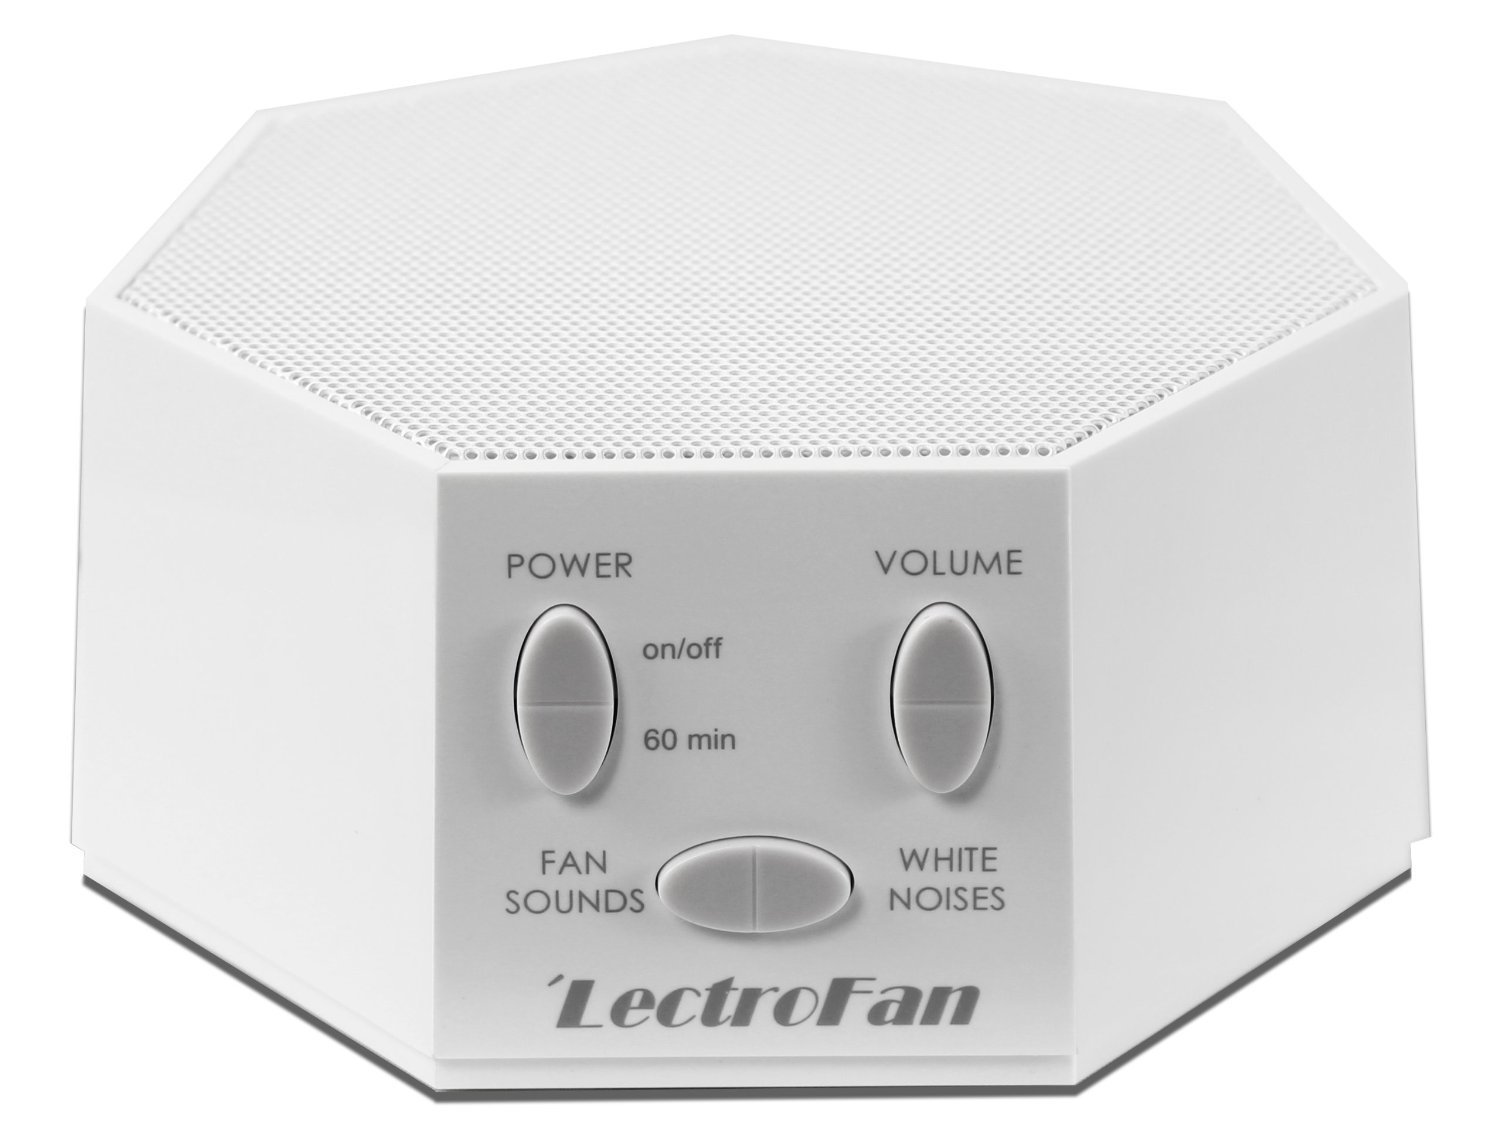 LectroFan Sound Machine Product Image